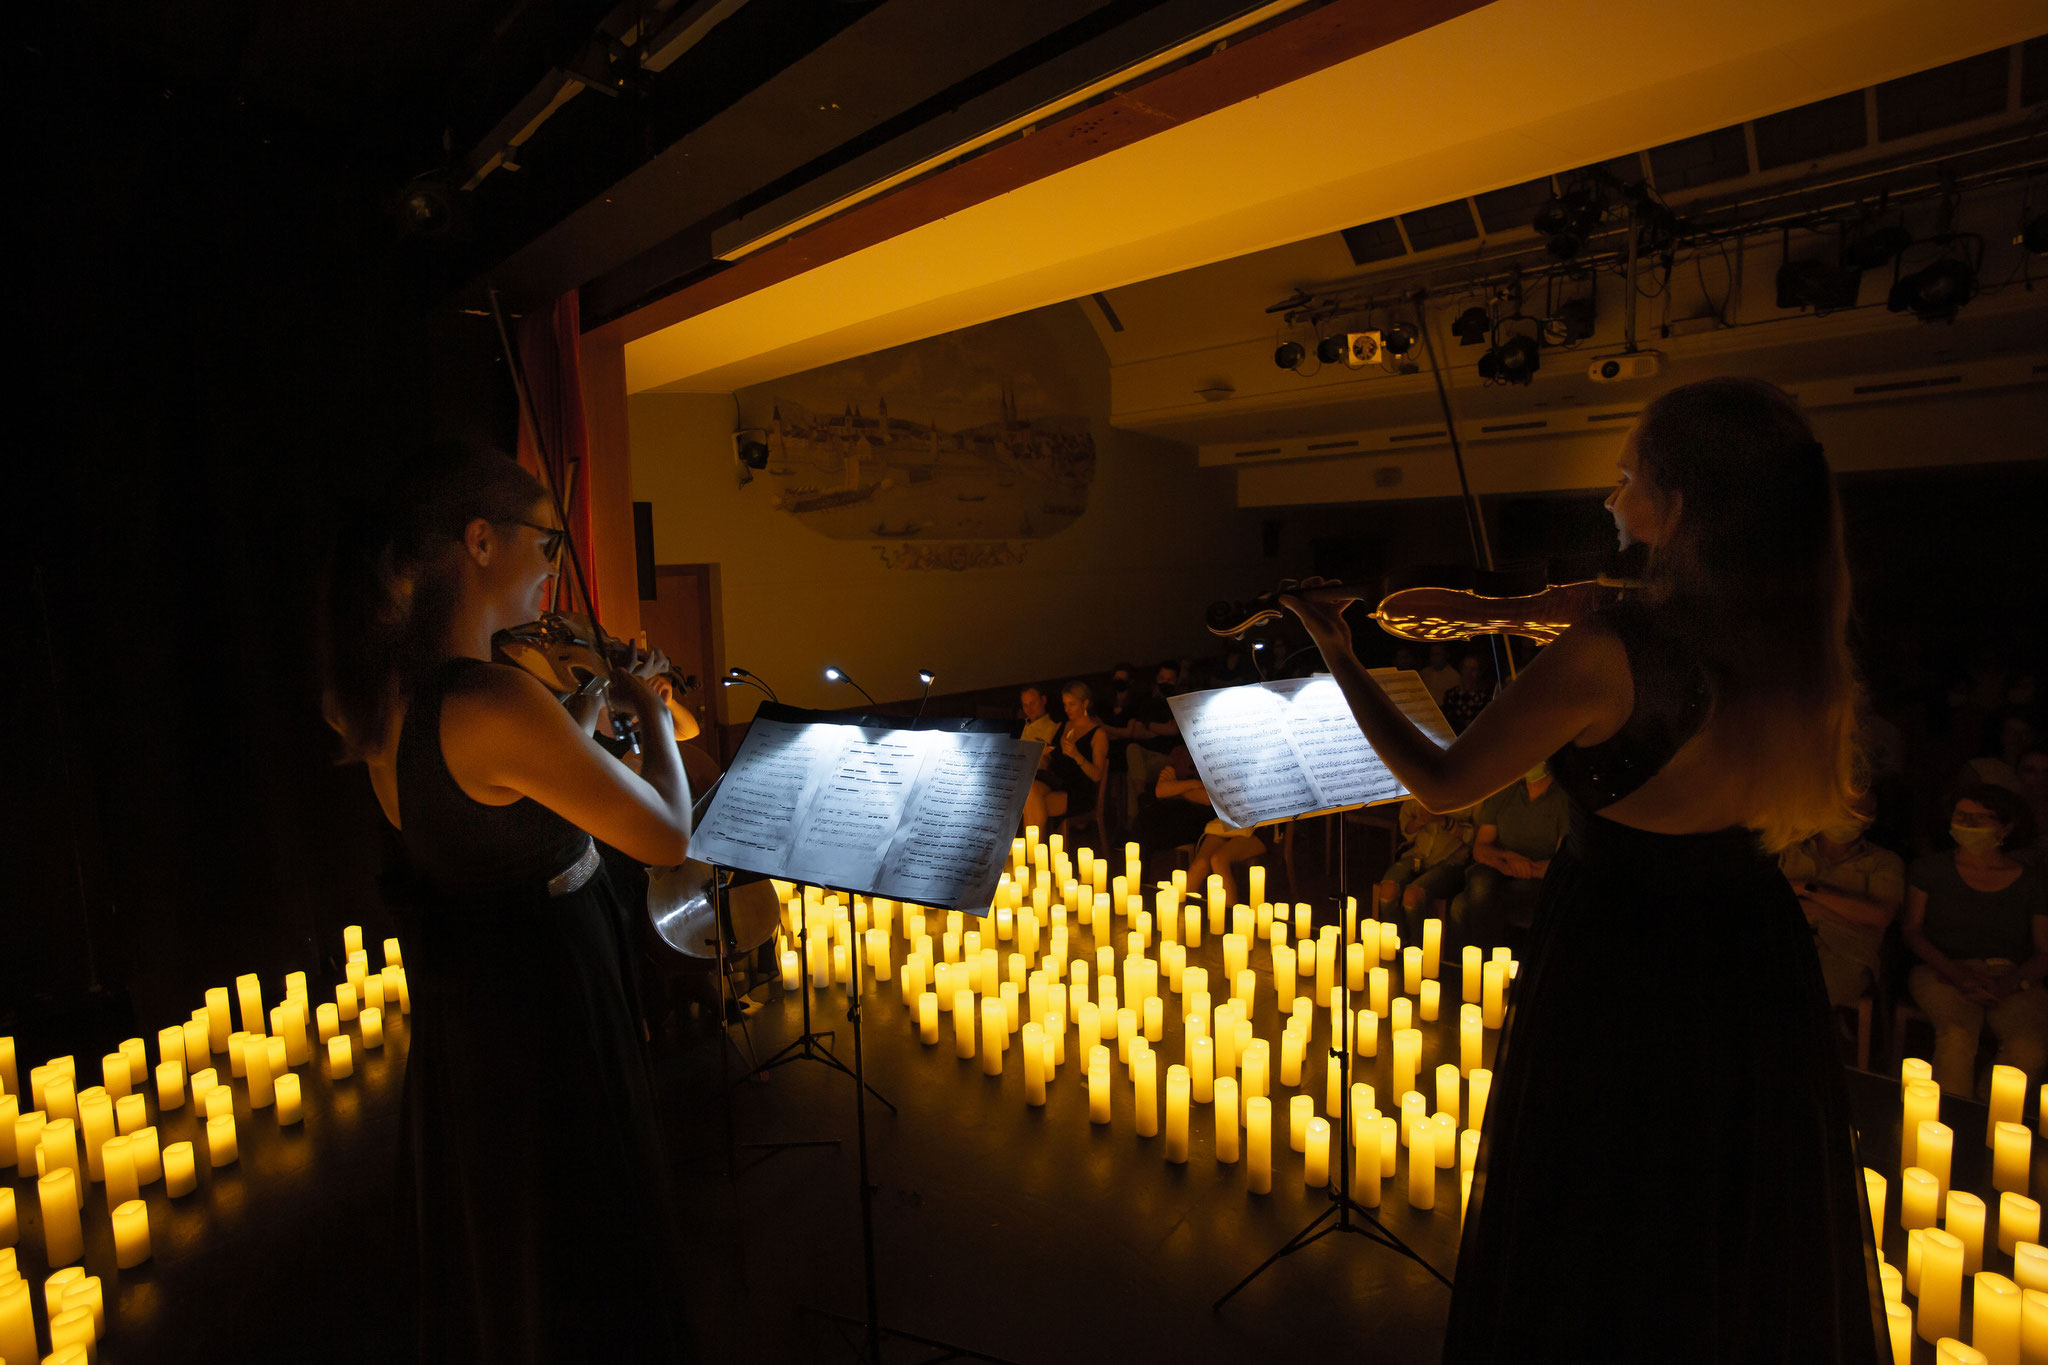 Candlelight Konzert im Weisser Wind. Foto: RND Photography.